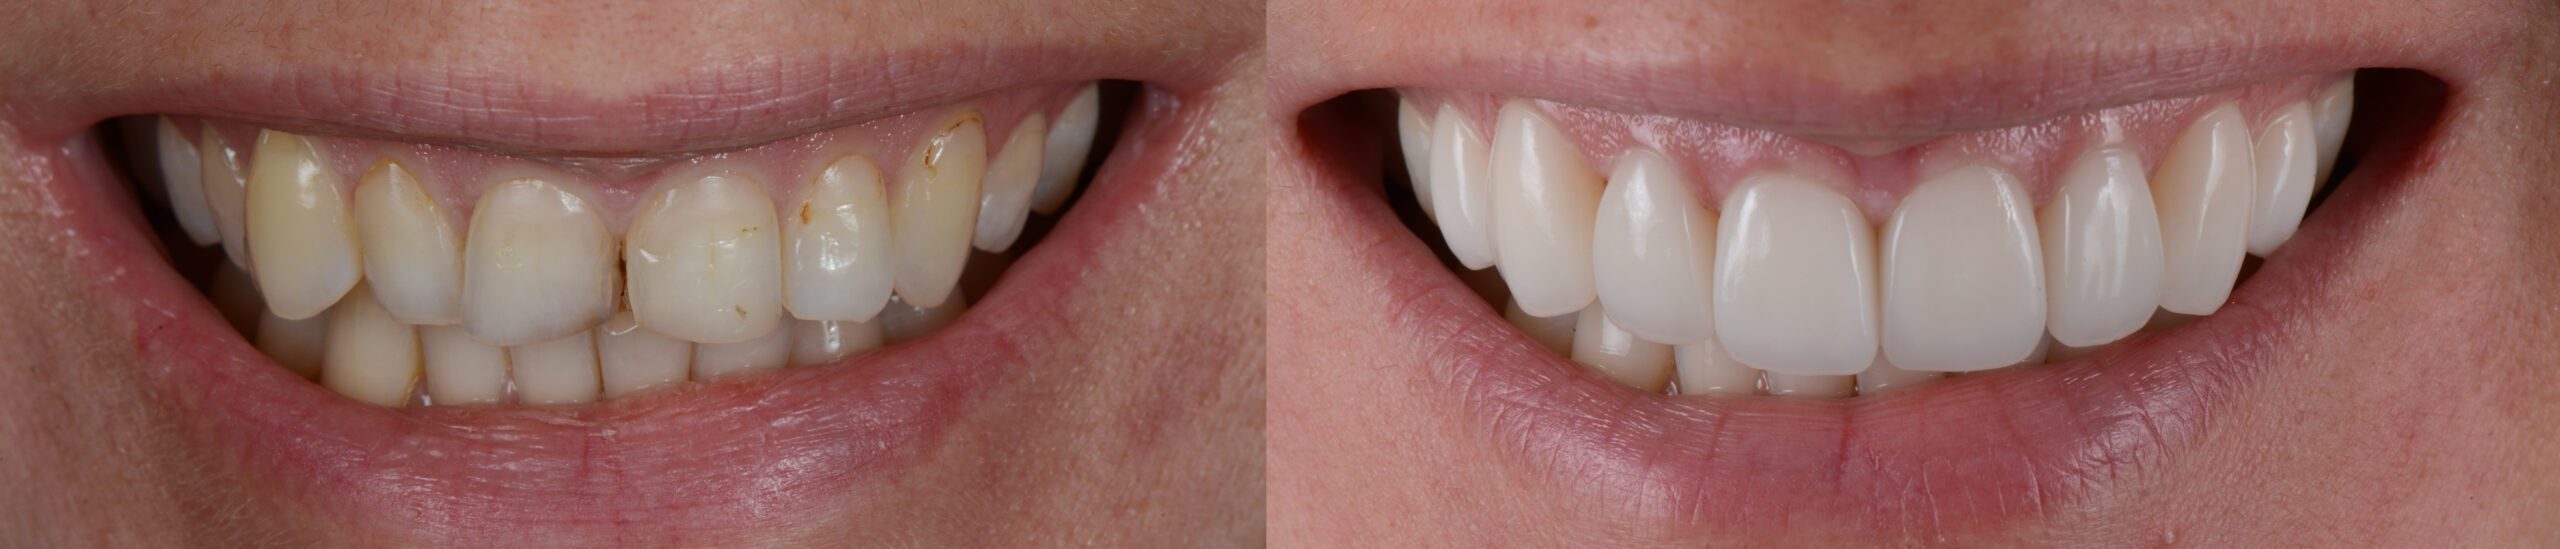 Dental Veneers Before and After Photo